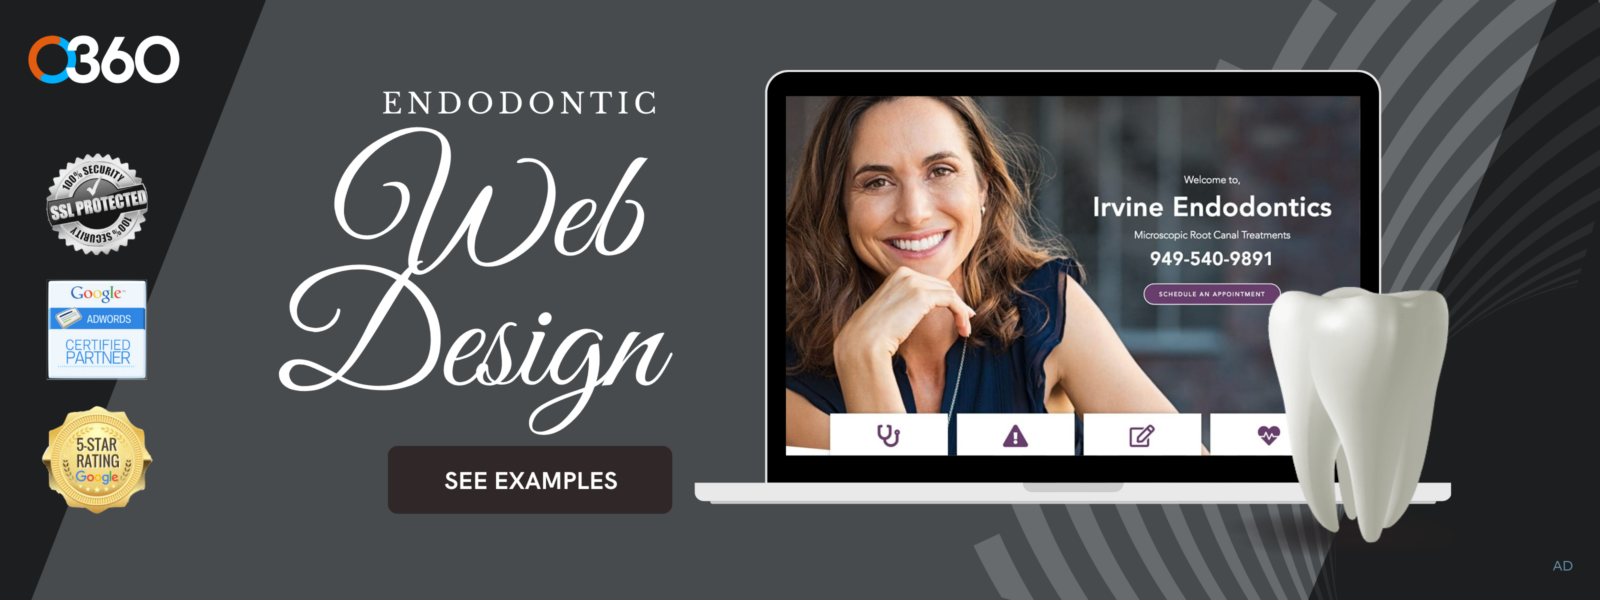 Endodontic web design